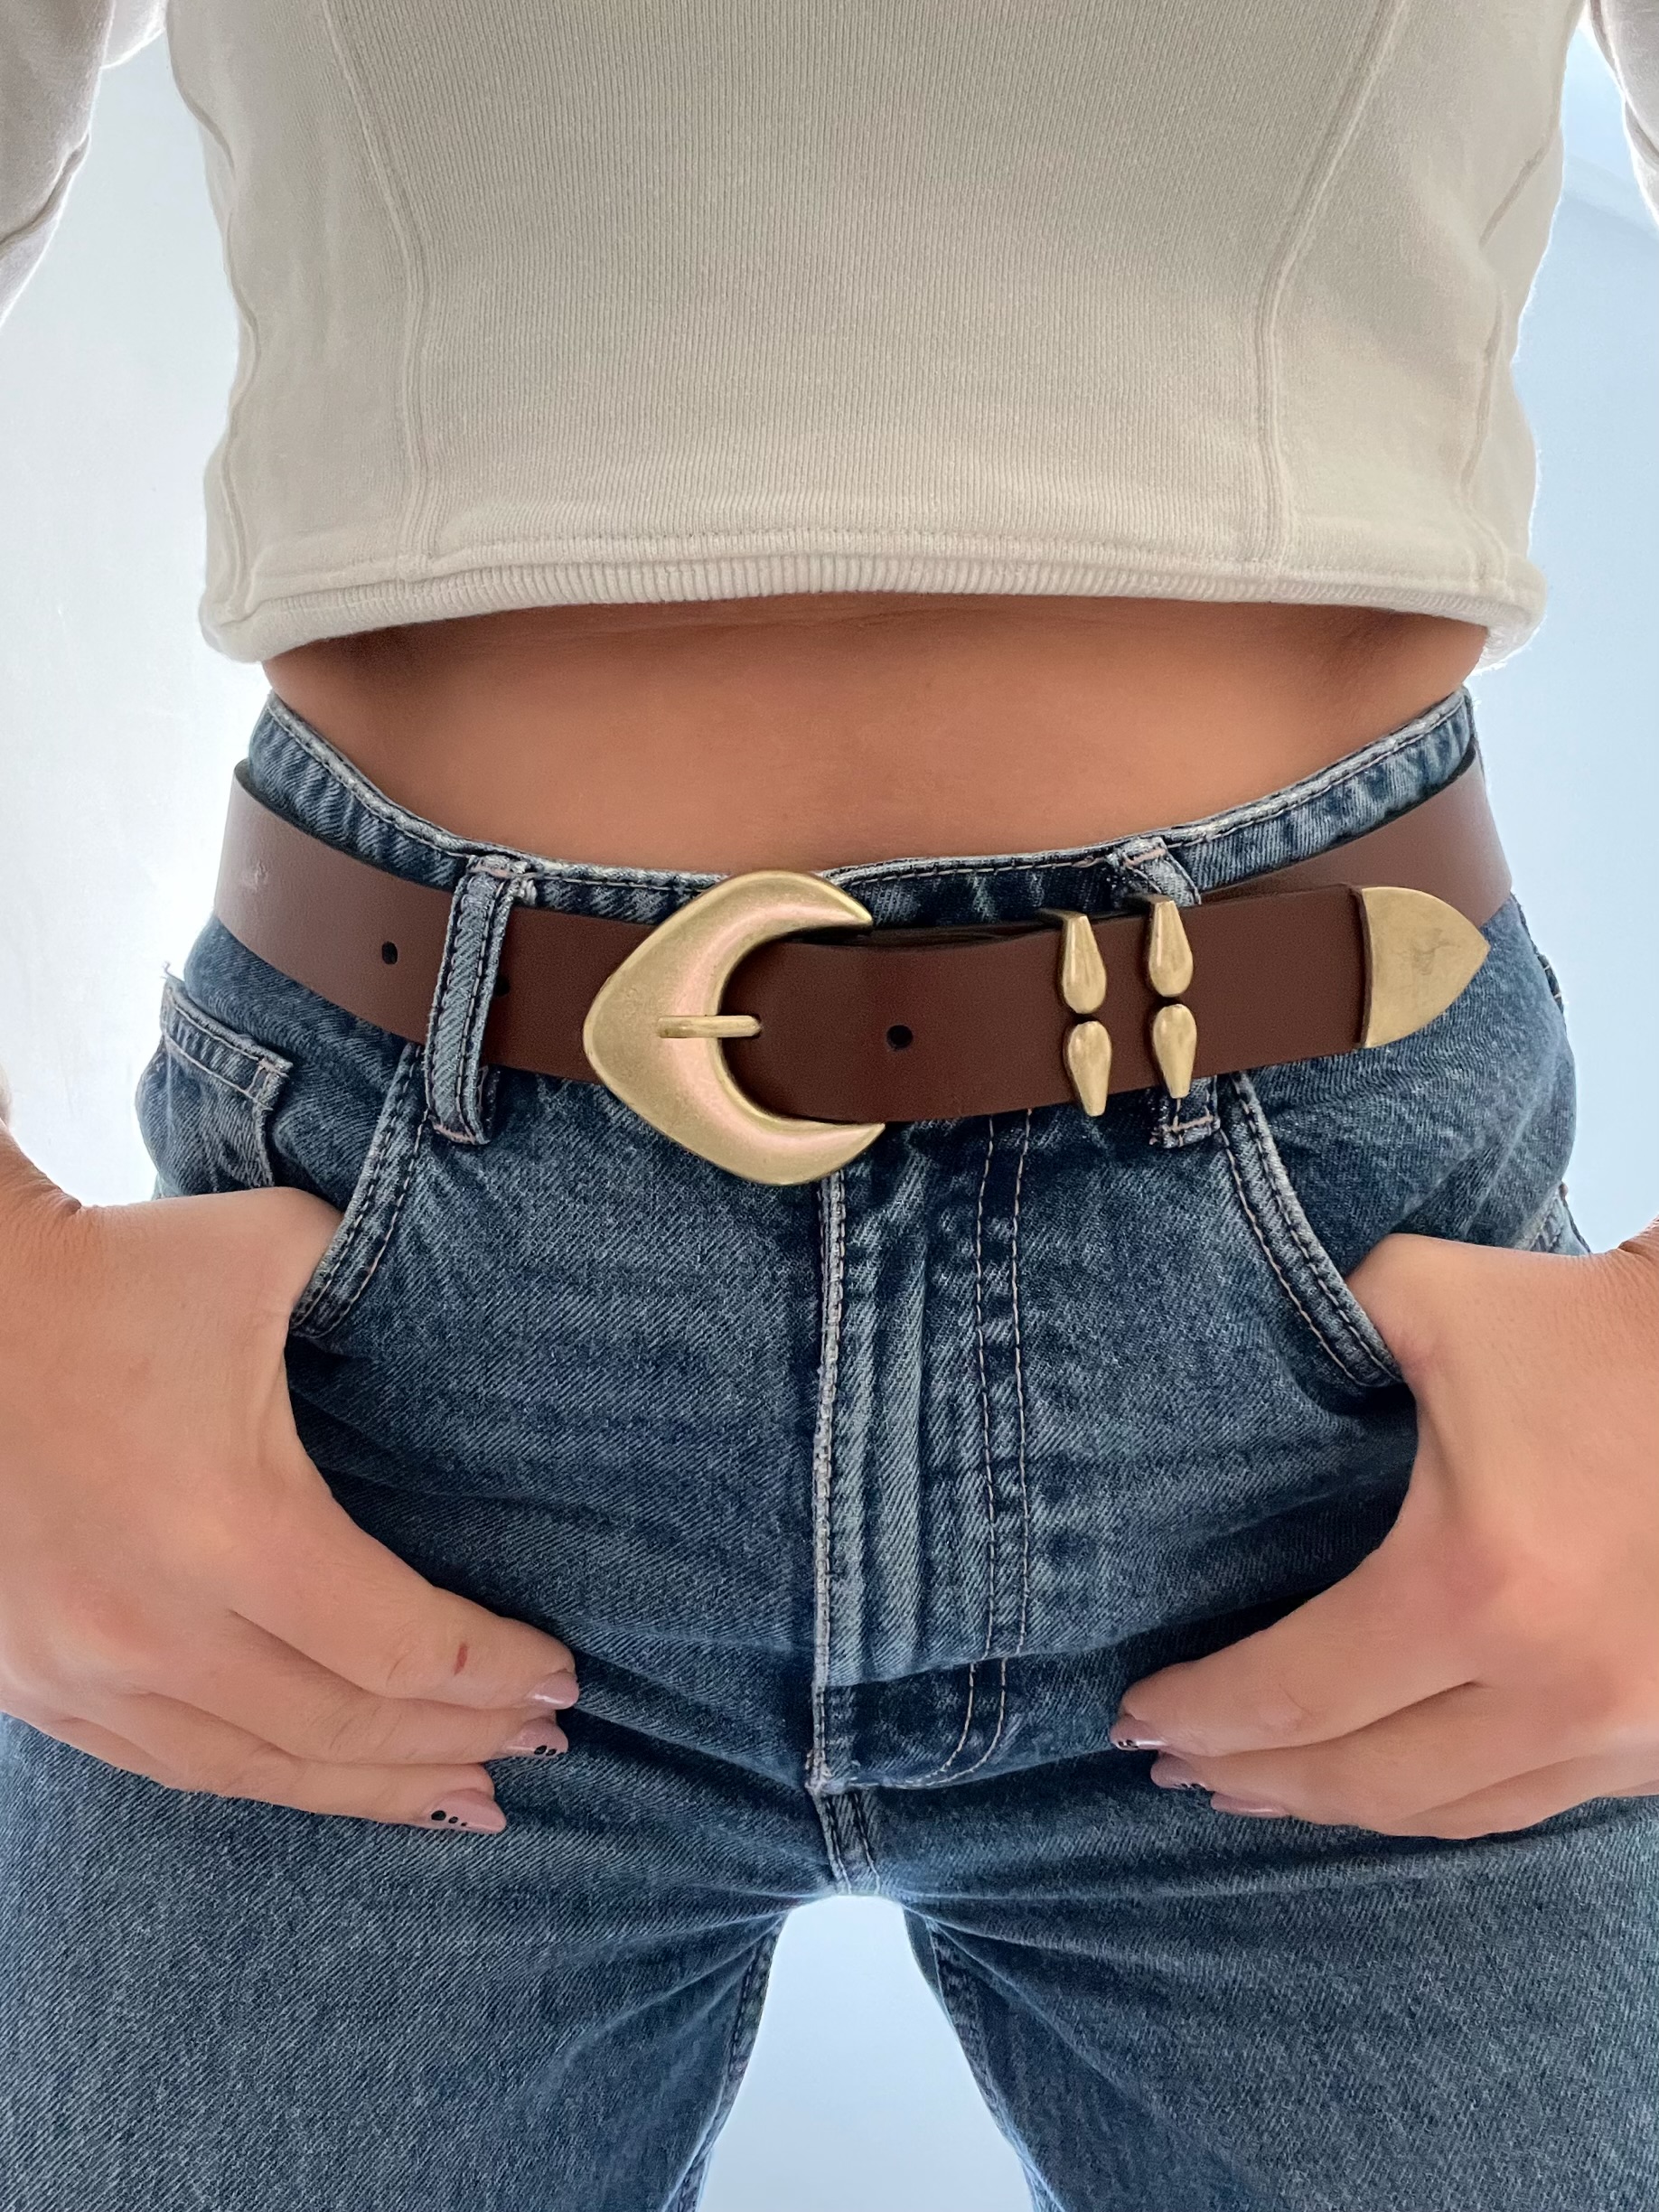 ACCESSORIES :: Belts :: Bronze Buckles Brown Leather Belt - Tight Hug ...